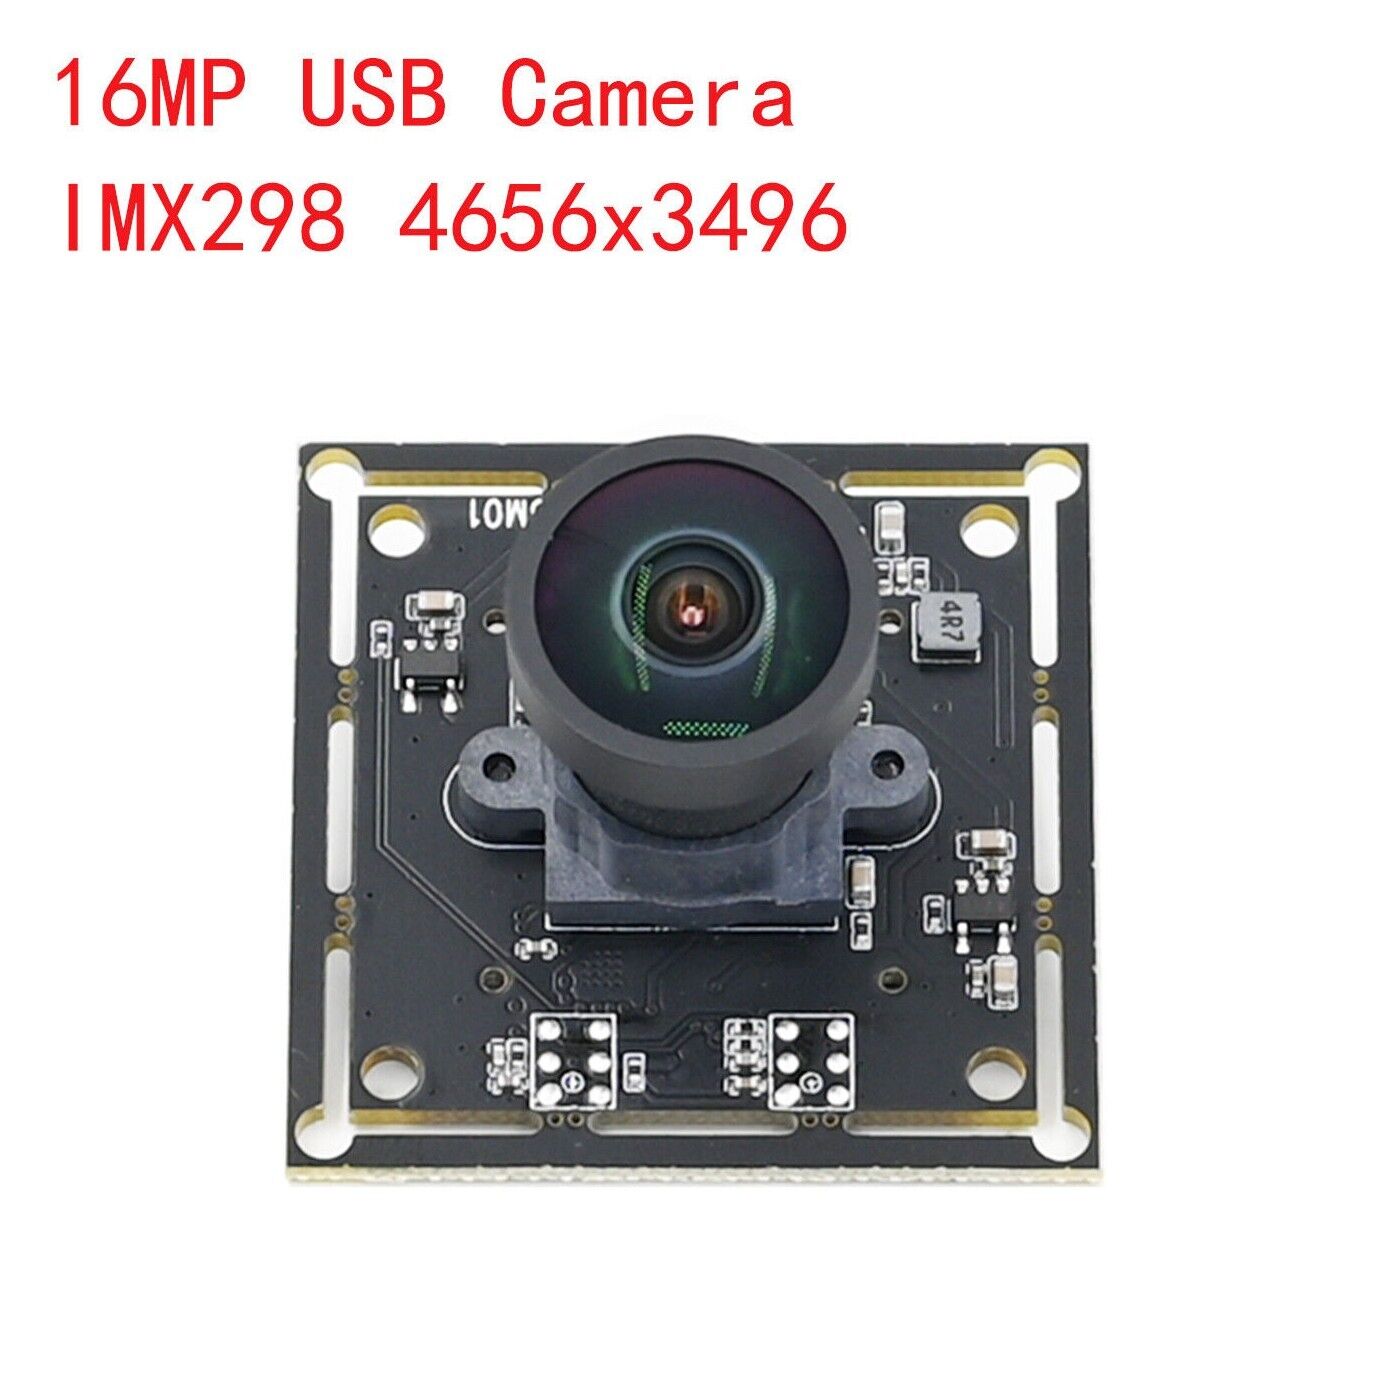 IMX298 16MP USB Camera Module 16-Megapixel Webcam HD Wide-Angle 4656x3496 10fps